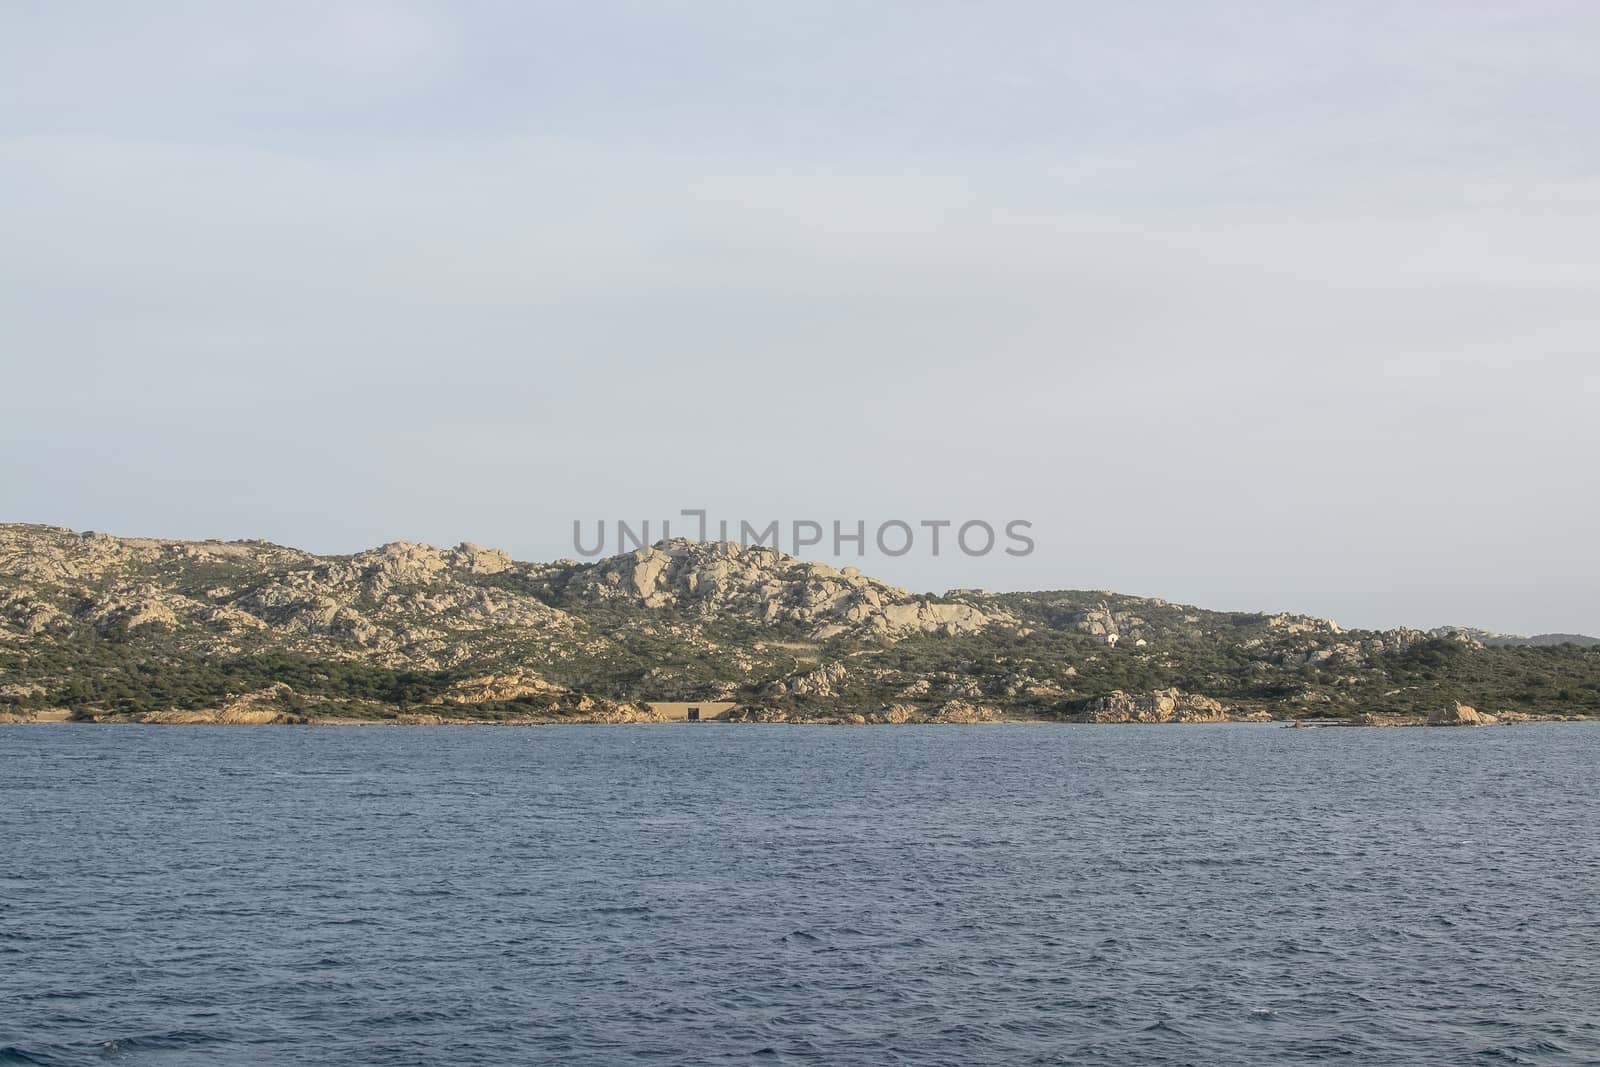 Archipelago landscape between Palau and Isola Maddalena in Costa Smeralda, Sardinia, Italy in March.